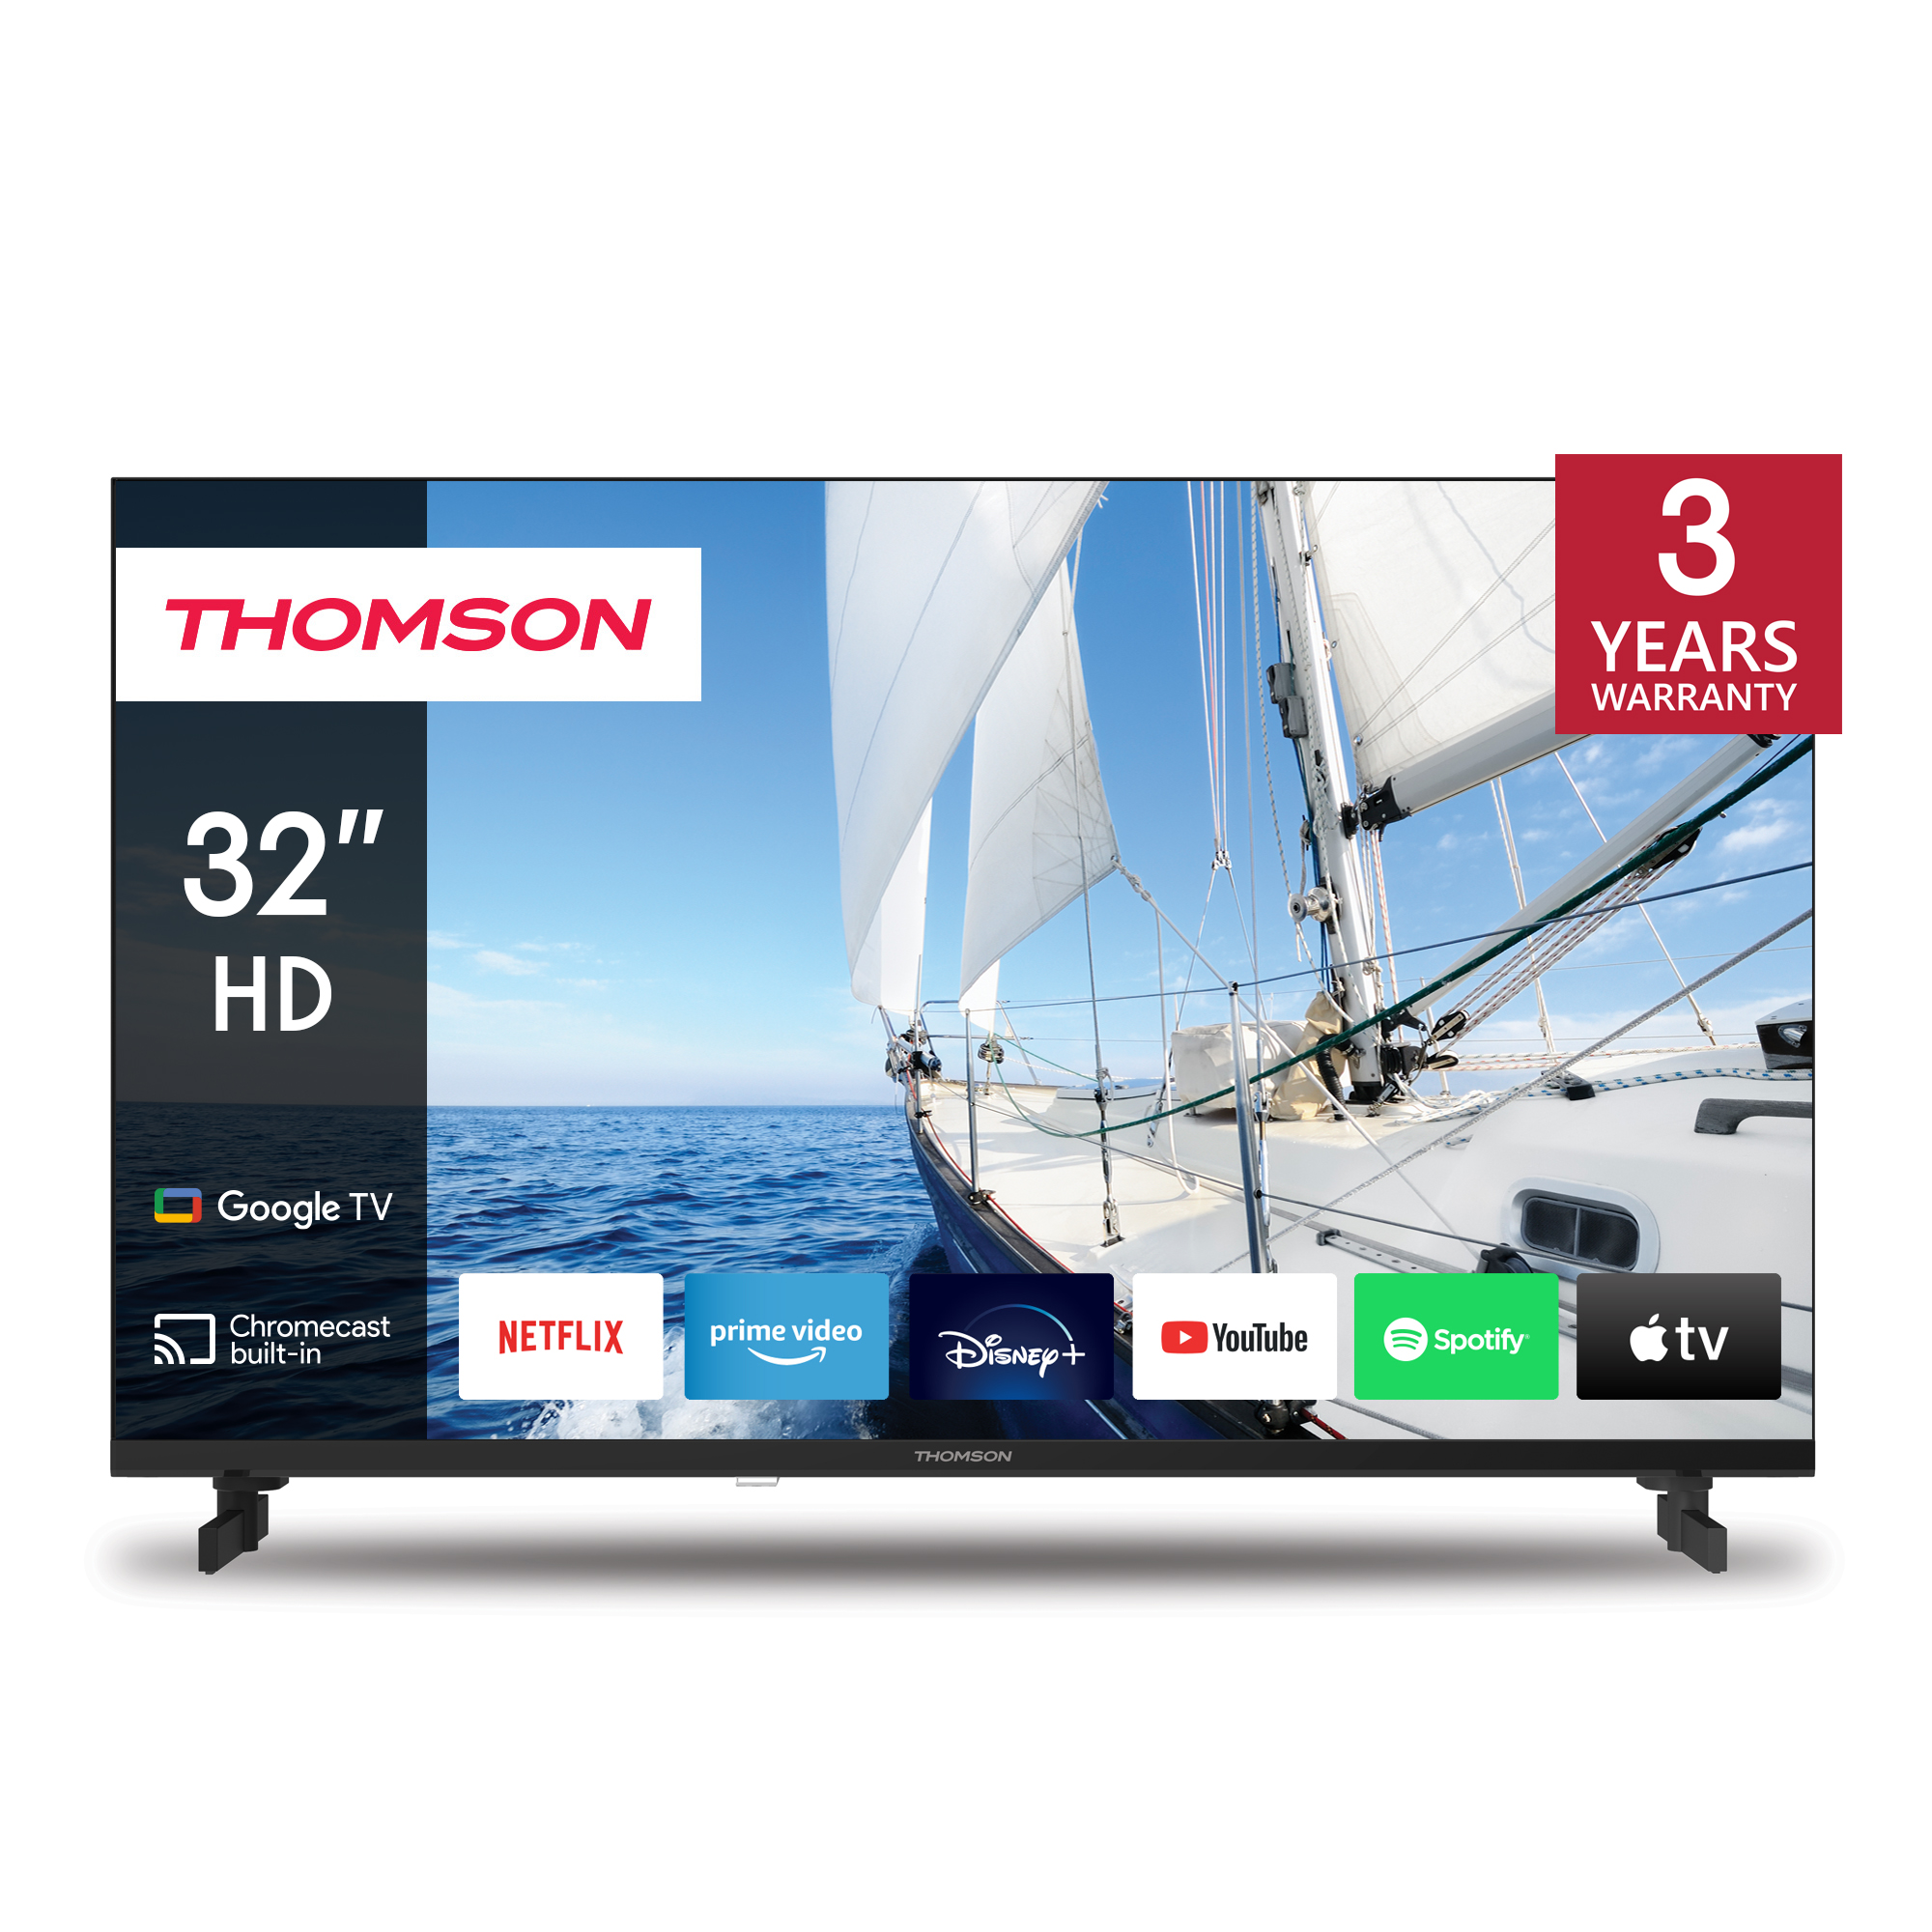 Thomson 32HG2S14 HD Google TV